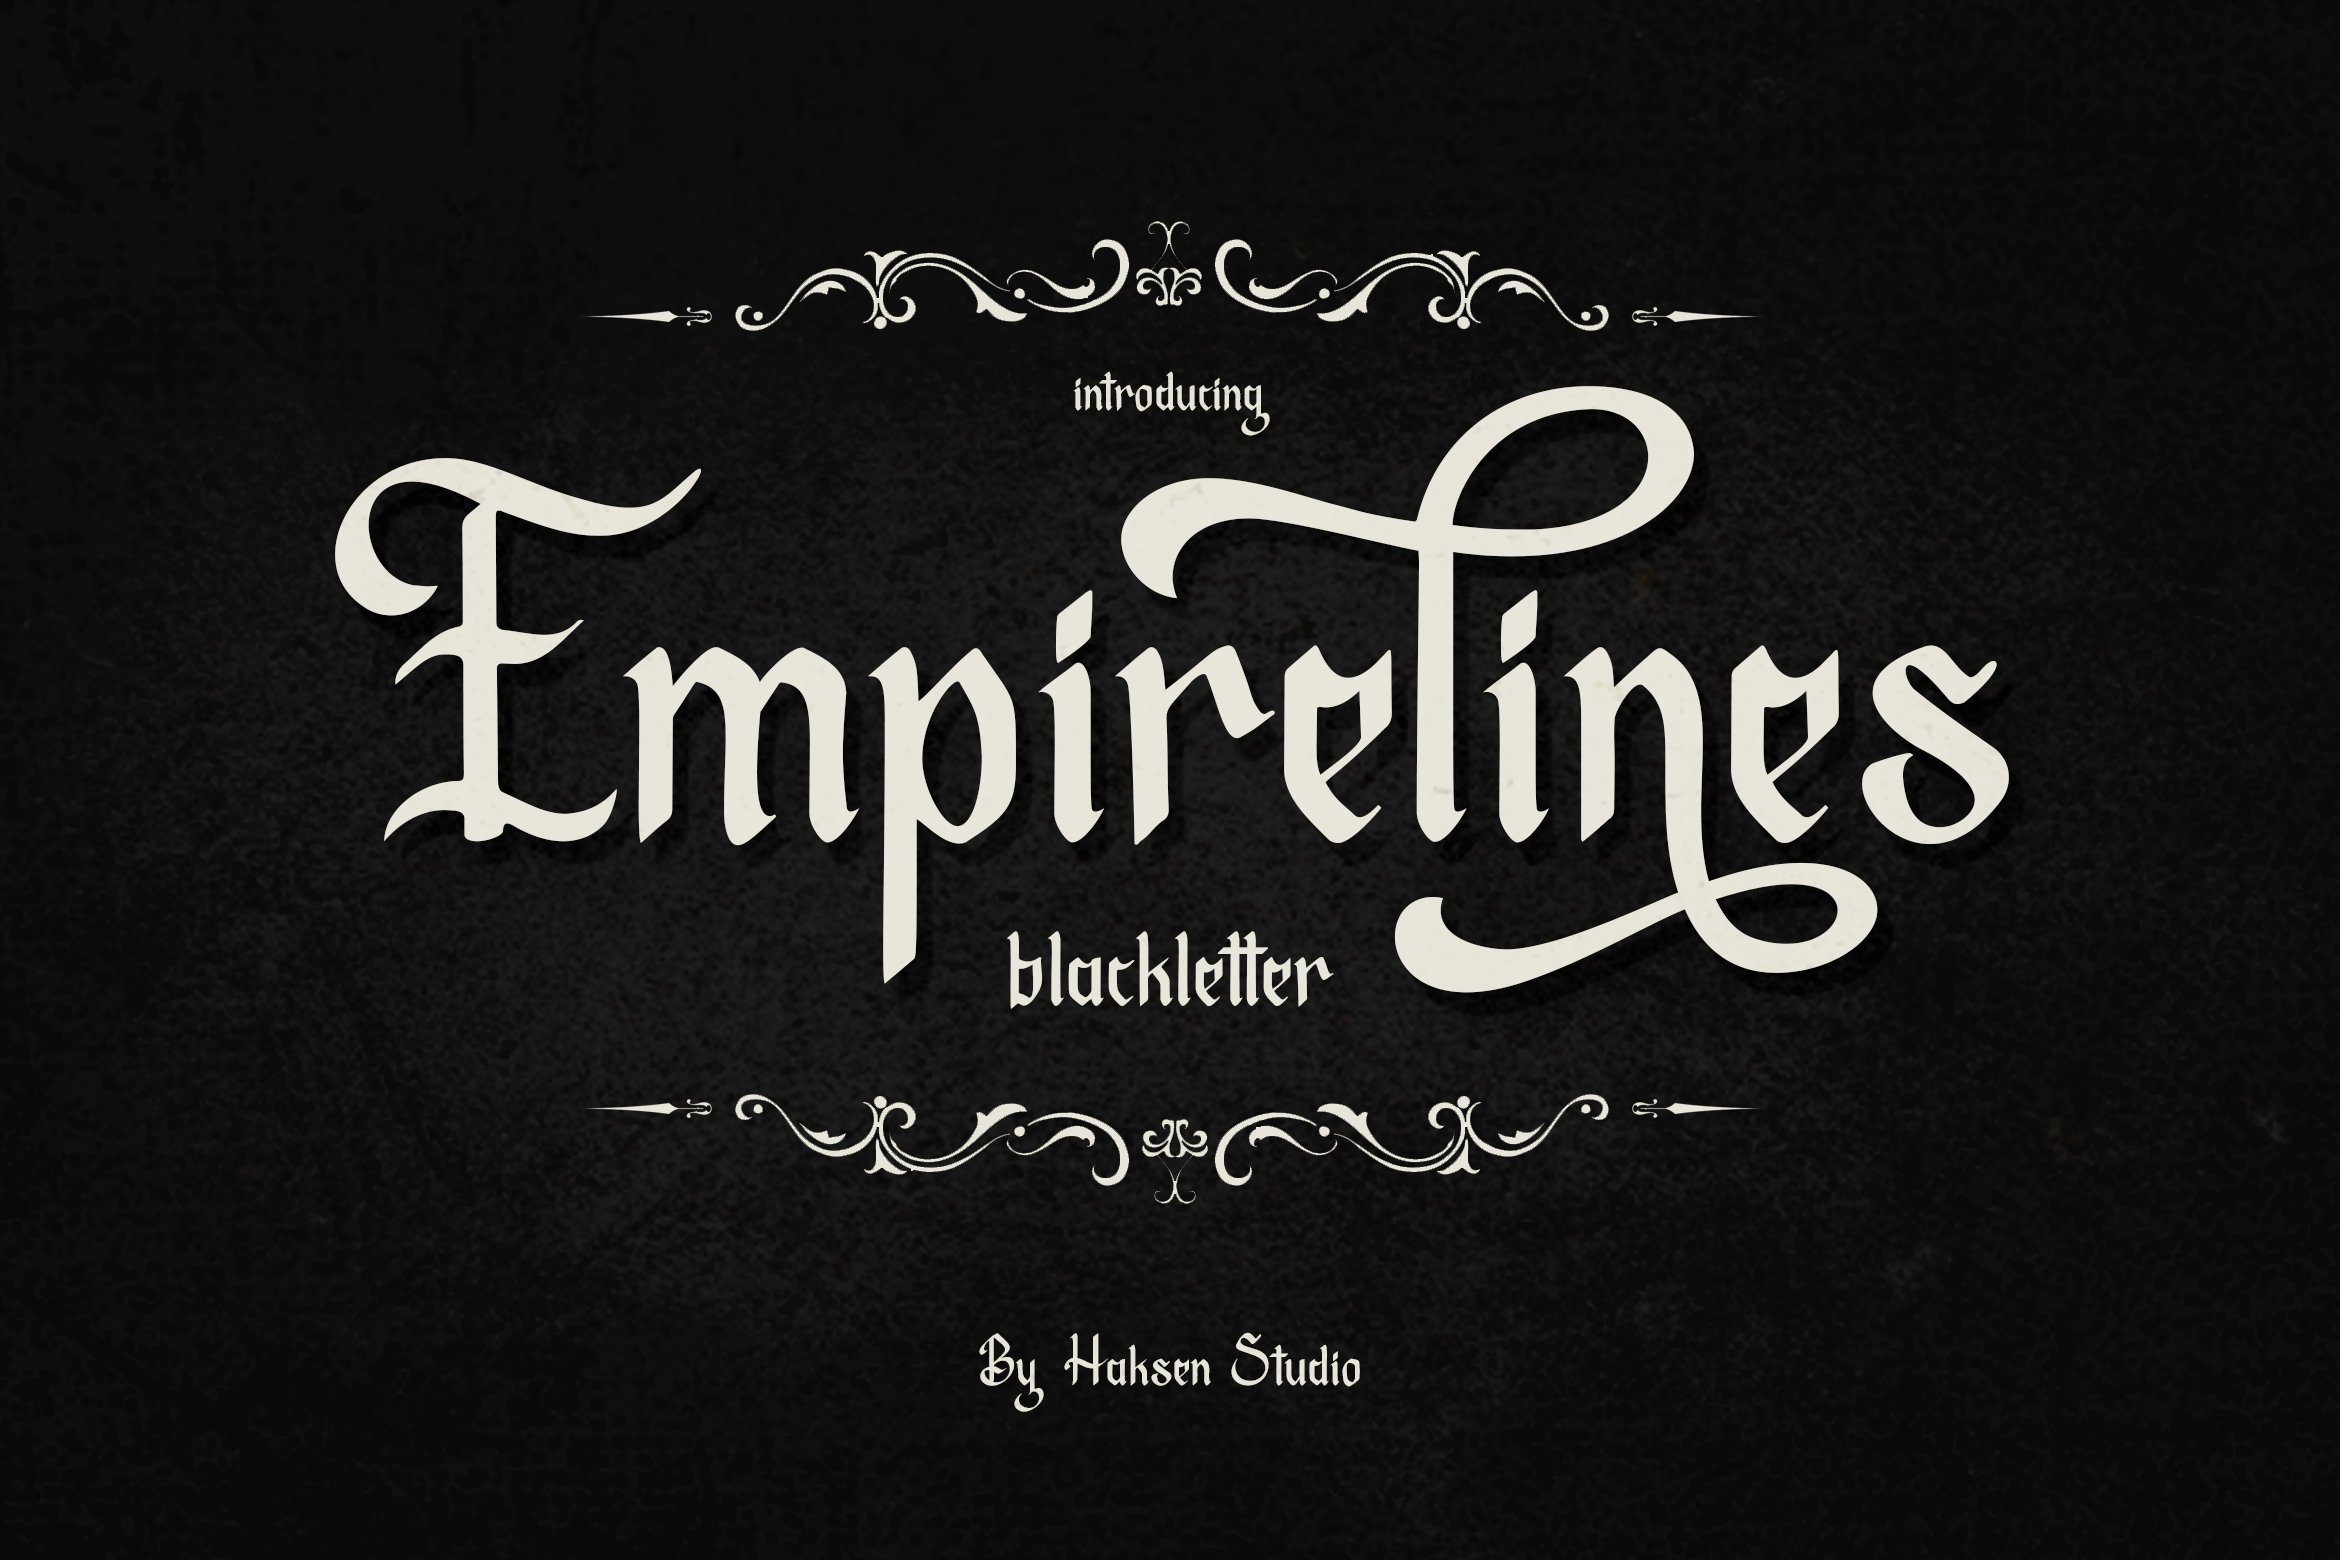 Empirelines cover image.